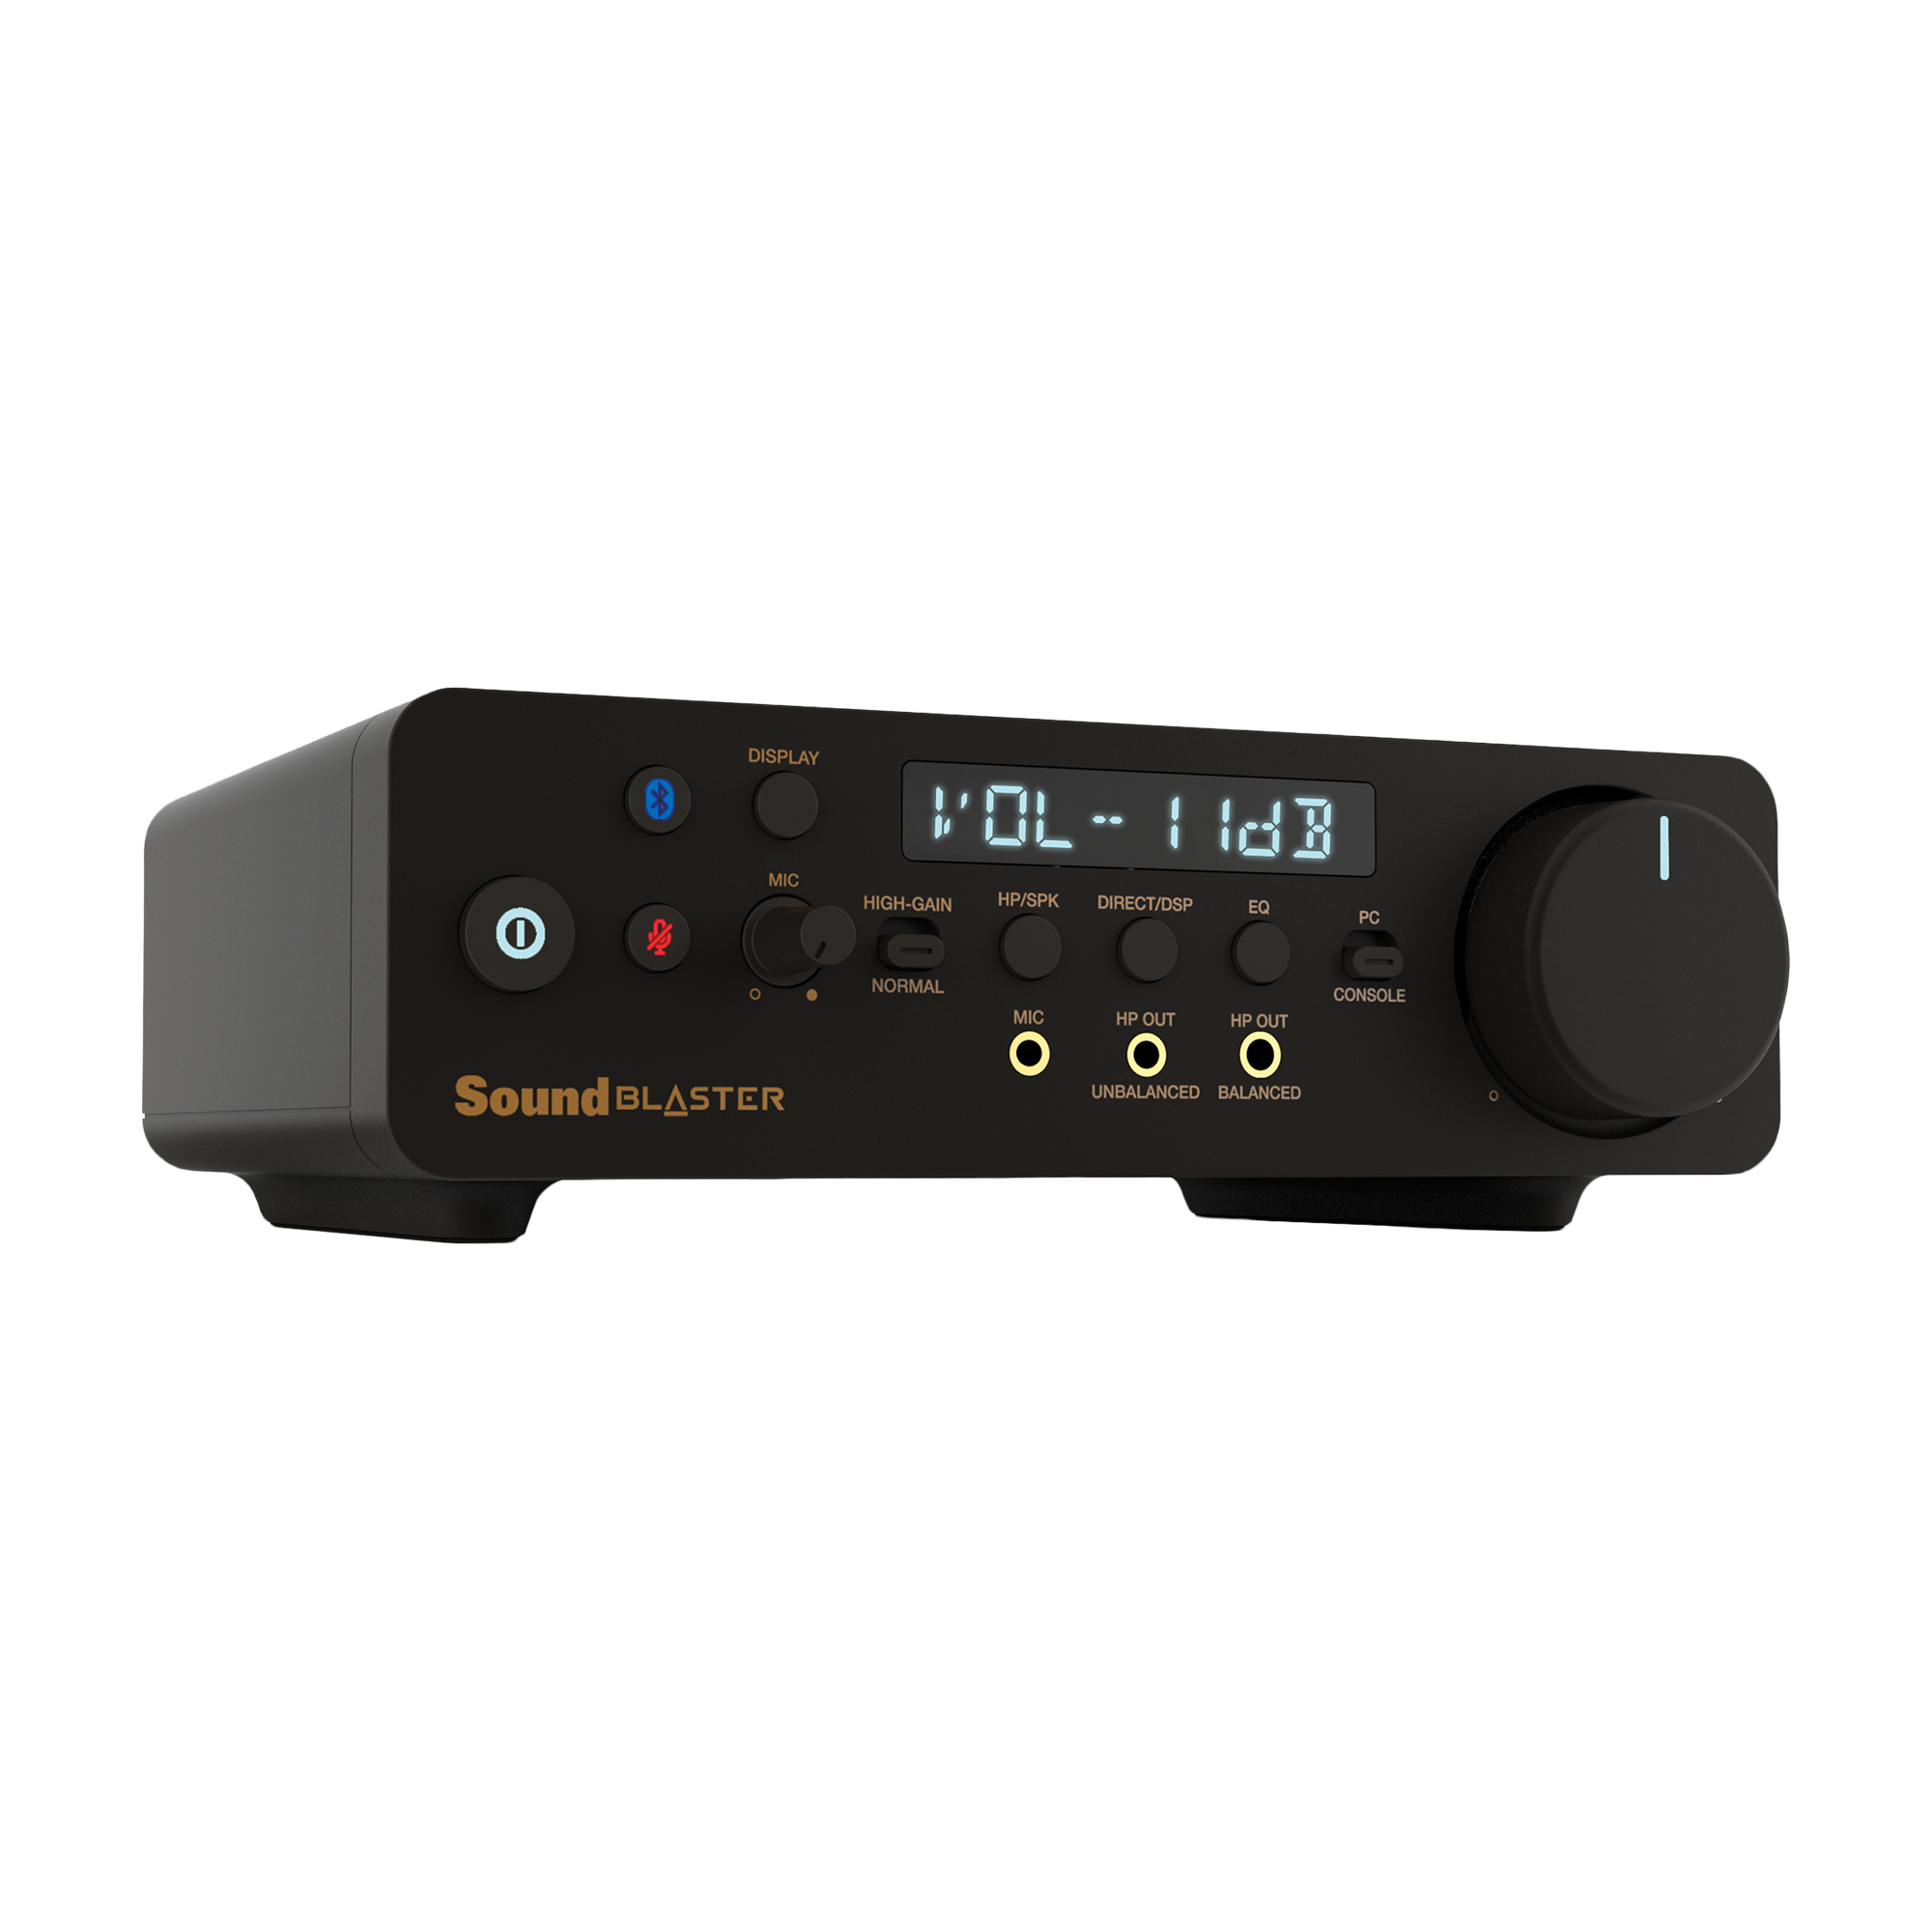 Sound Blaster X5 Hi-res External Dual DAC USB Sound Card with